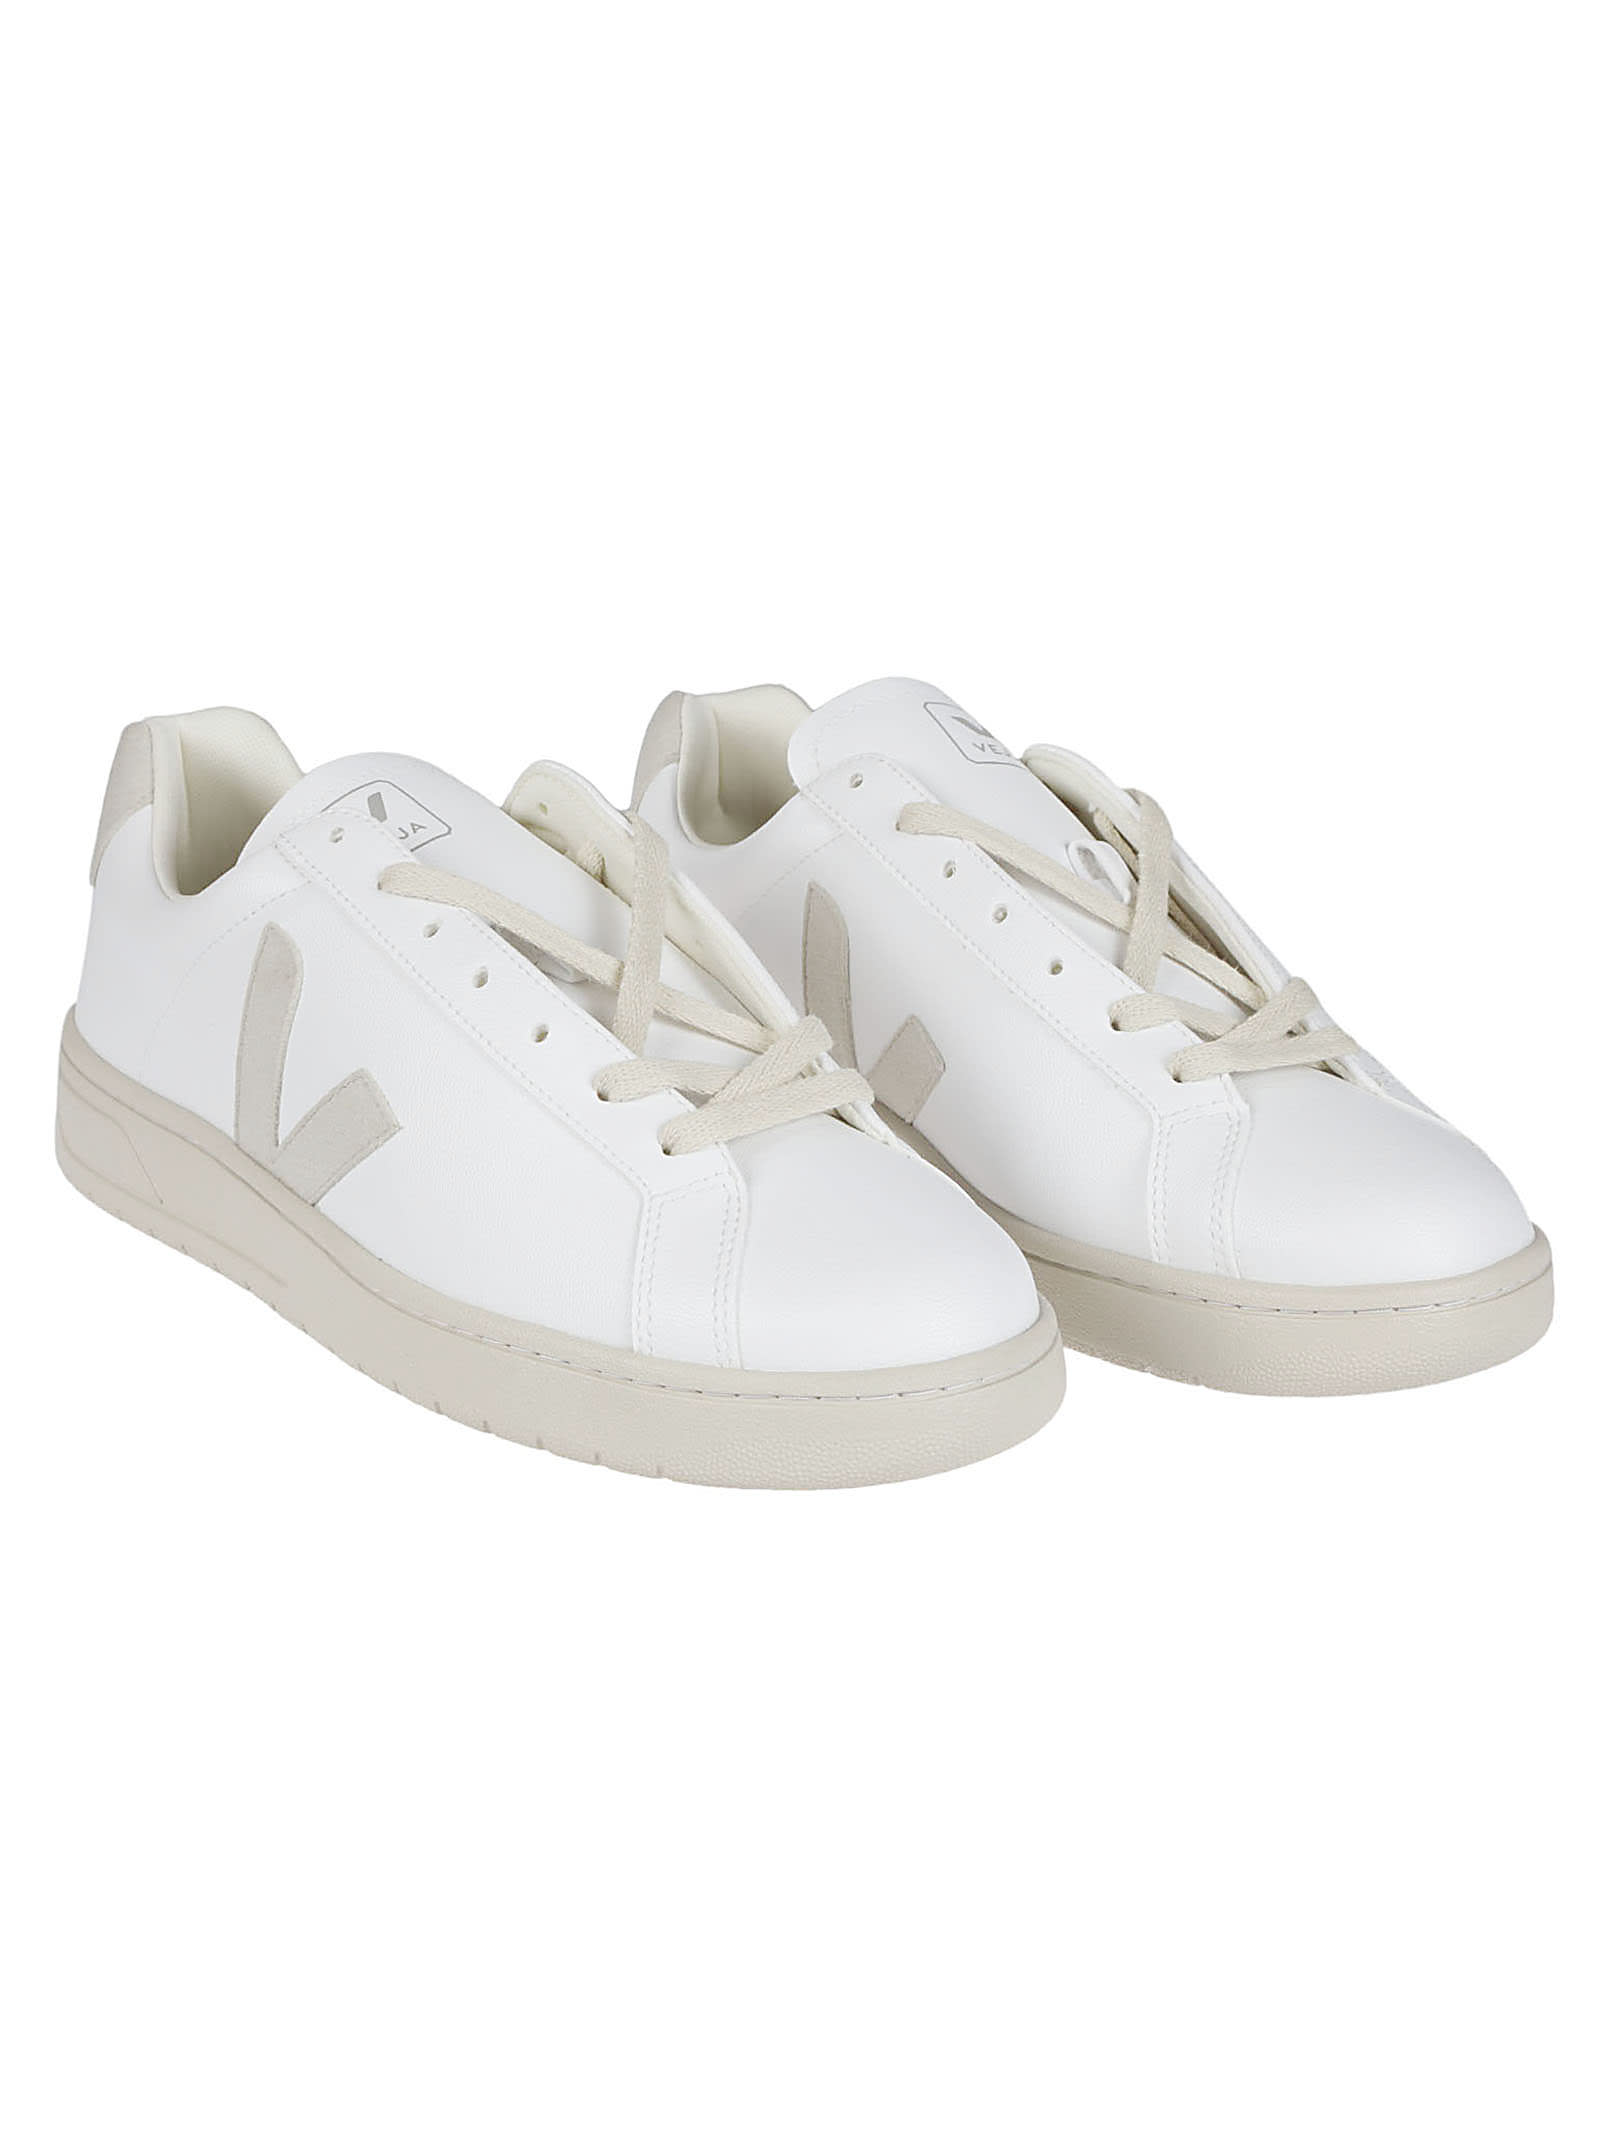 Shop Veja Urca Sneakers In White/natural